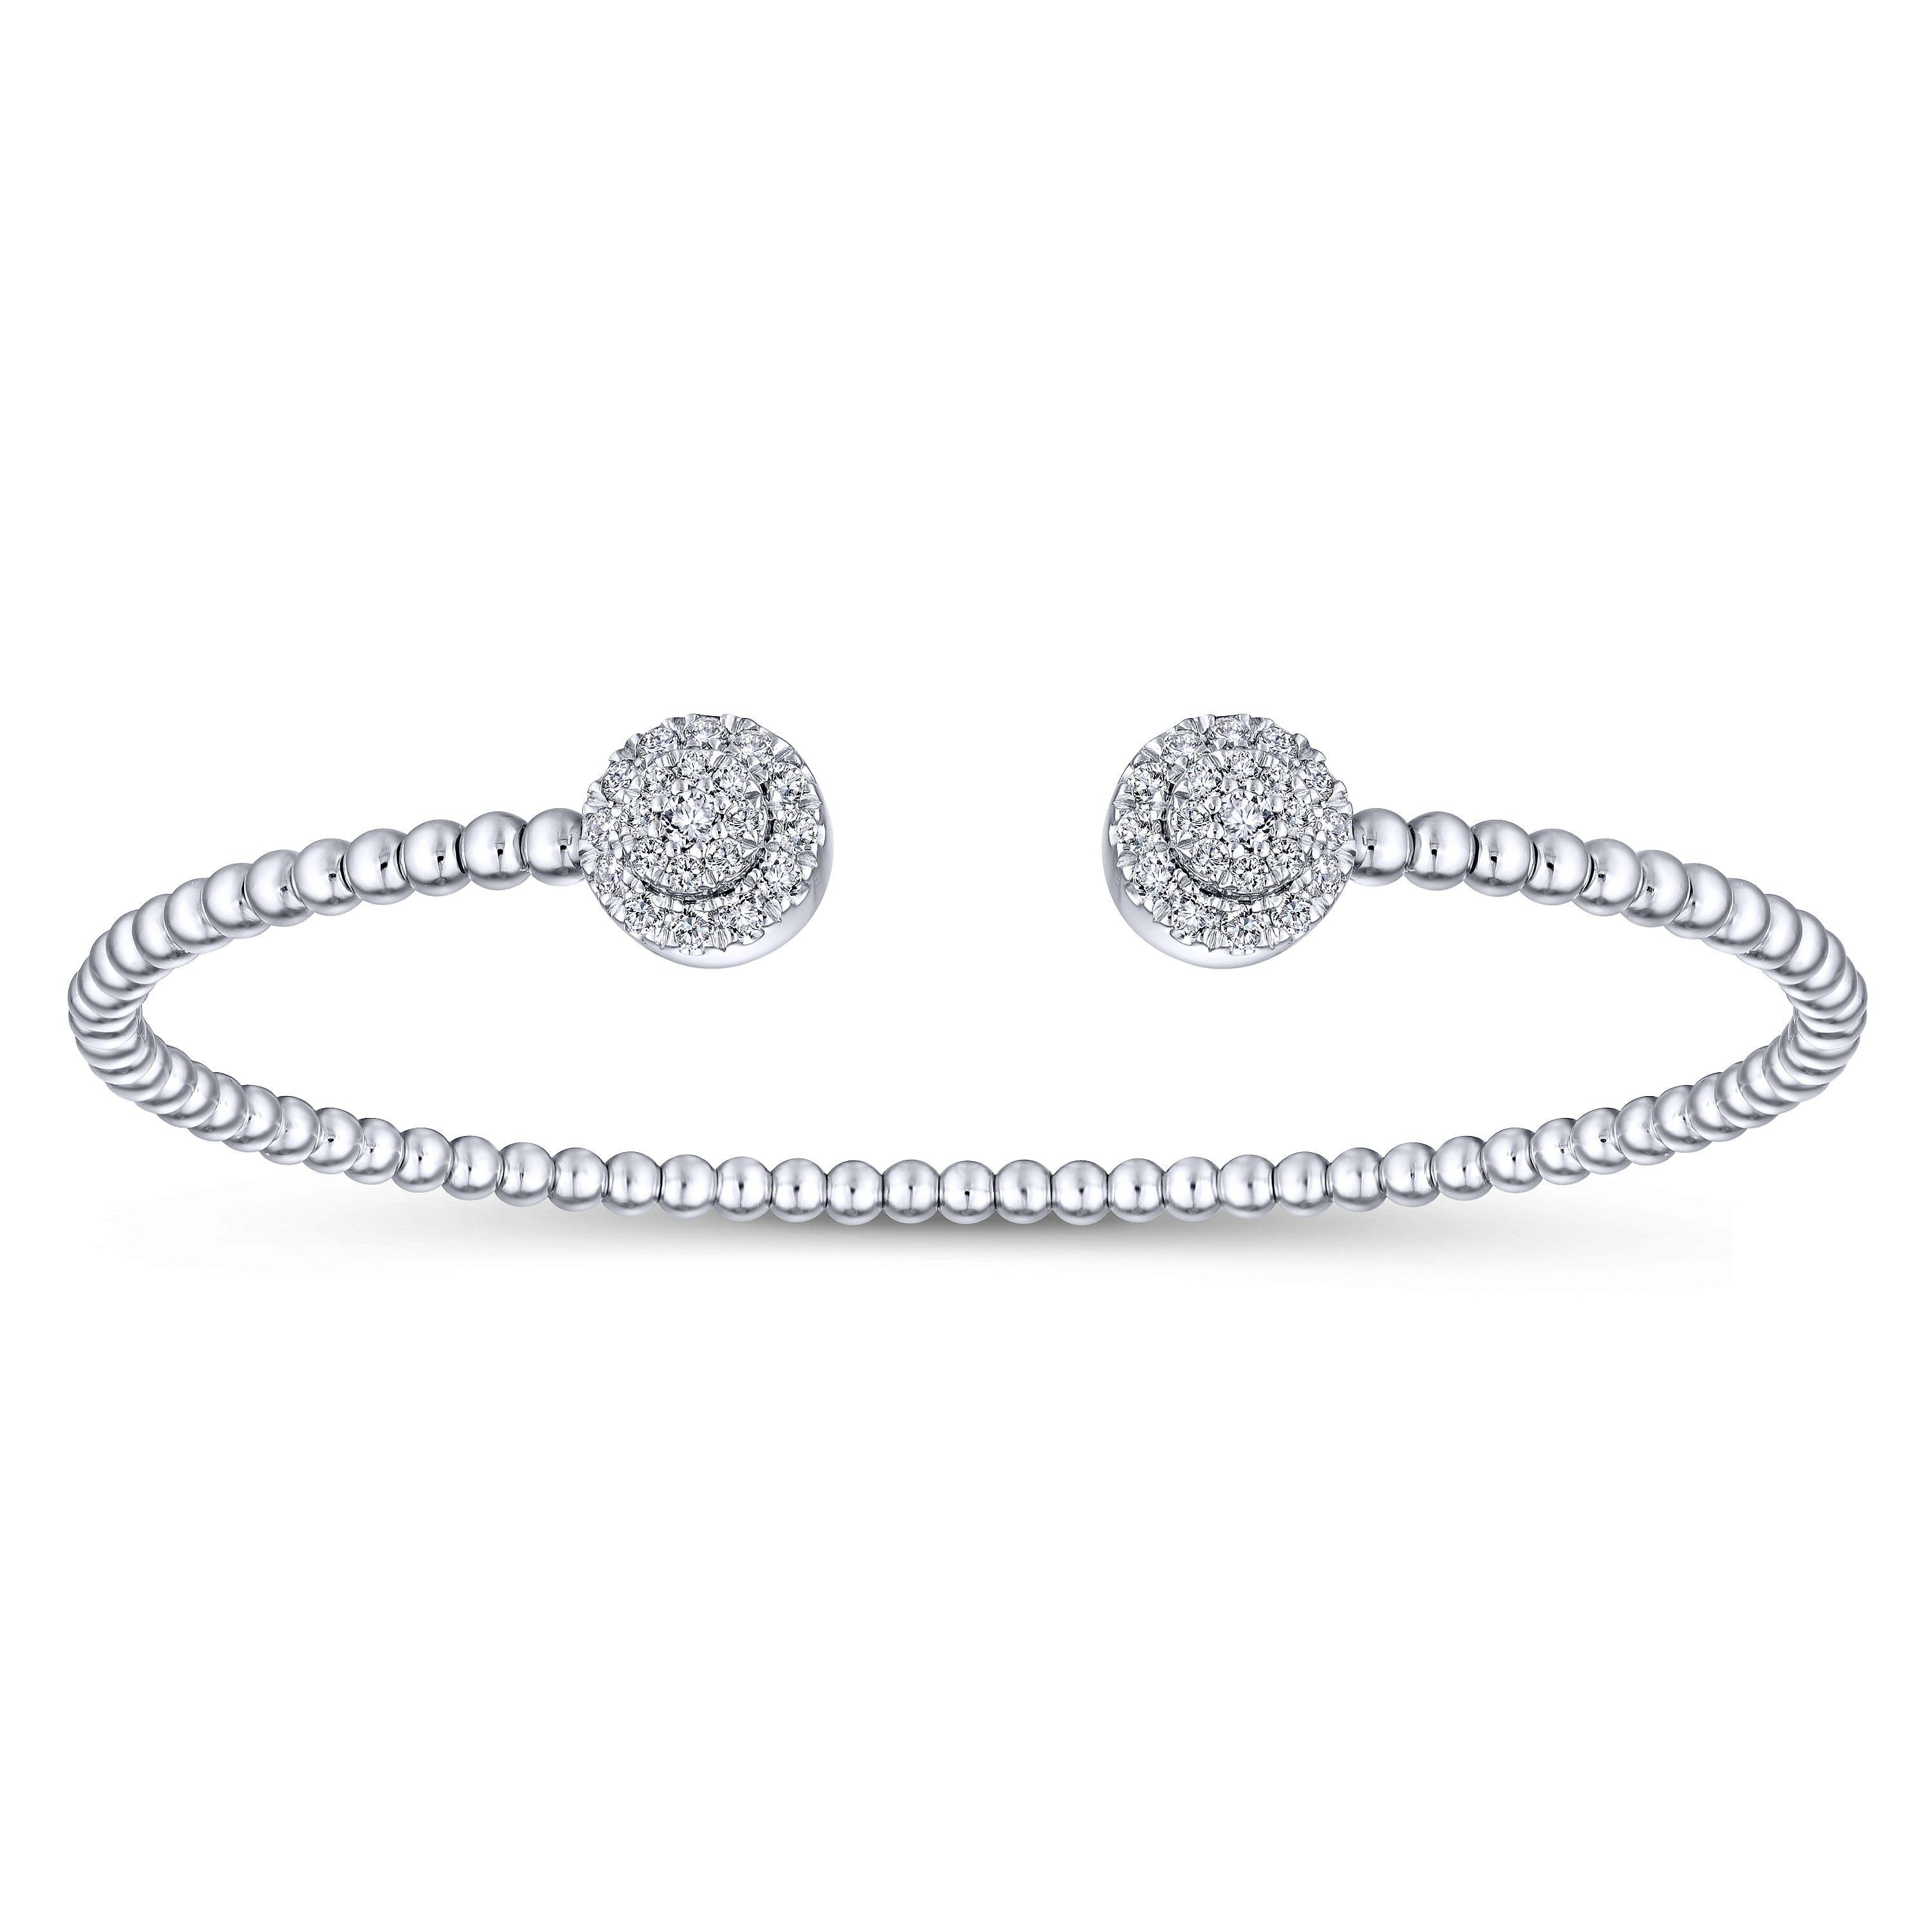 14K White Gold Bujukan Bead Split Cuff Bracelet with Round Pavé Diamond Discs